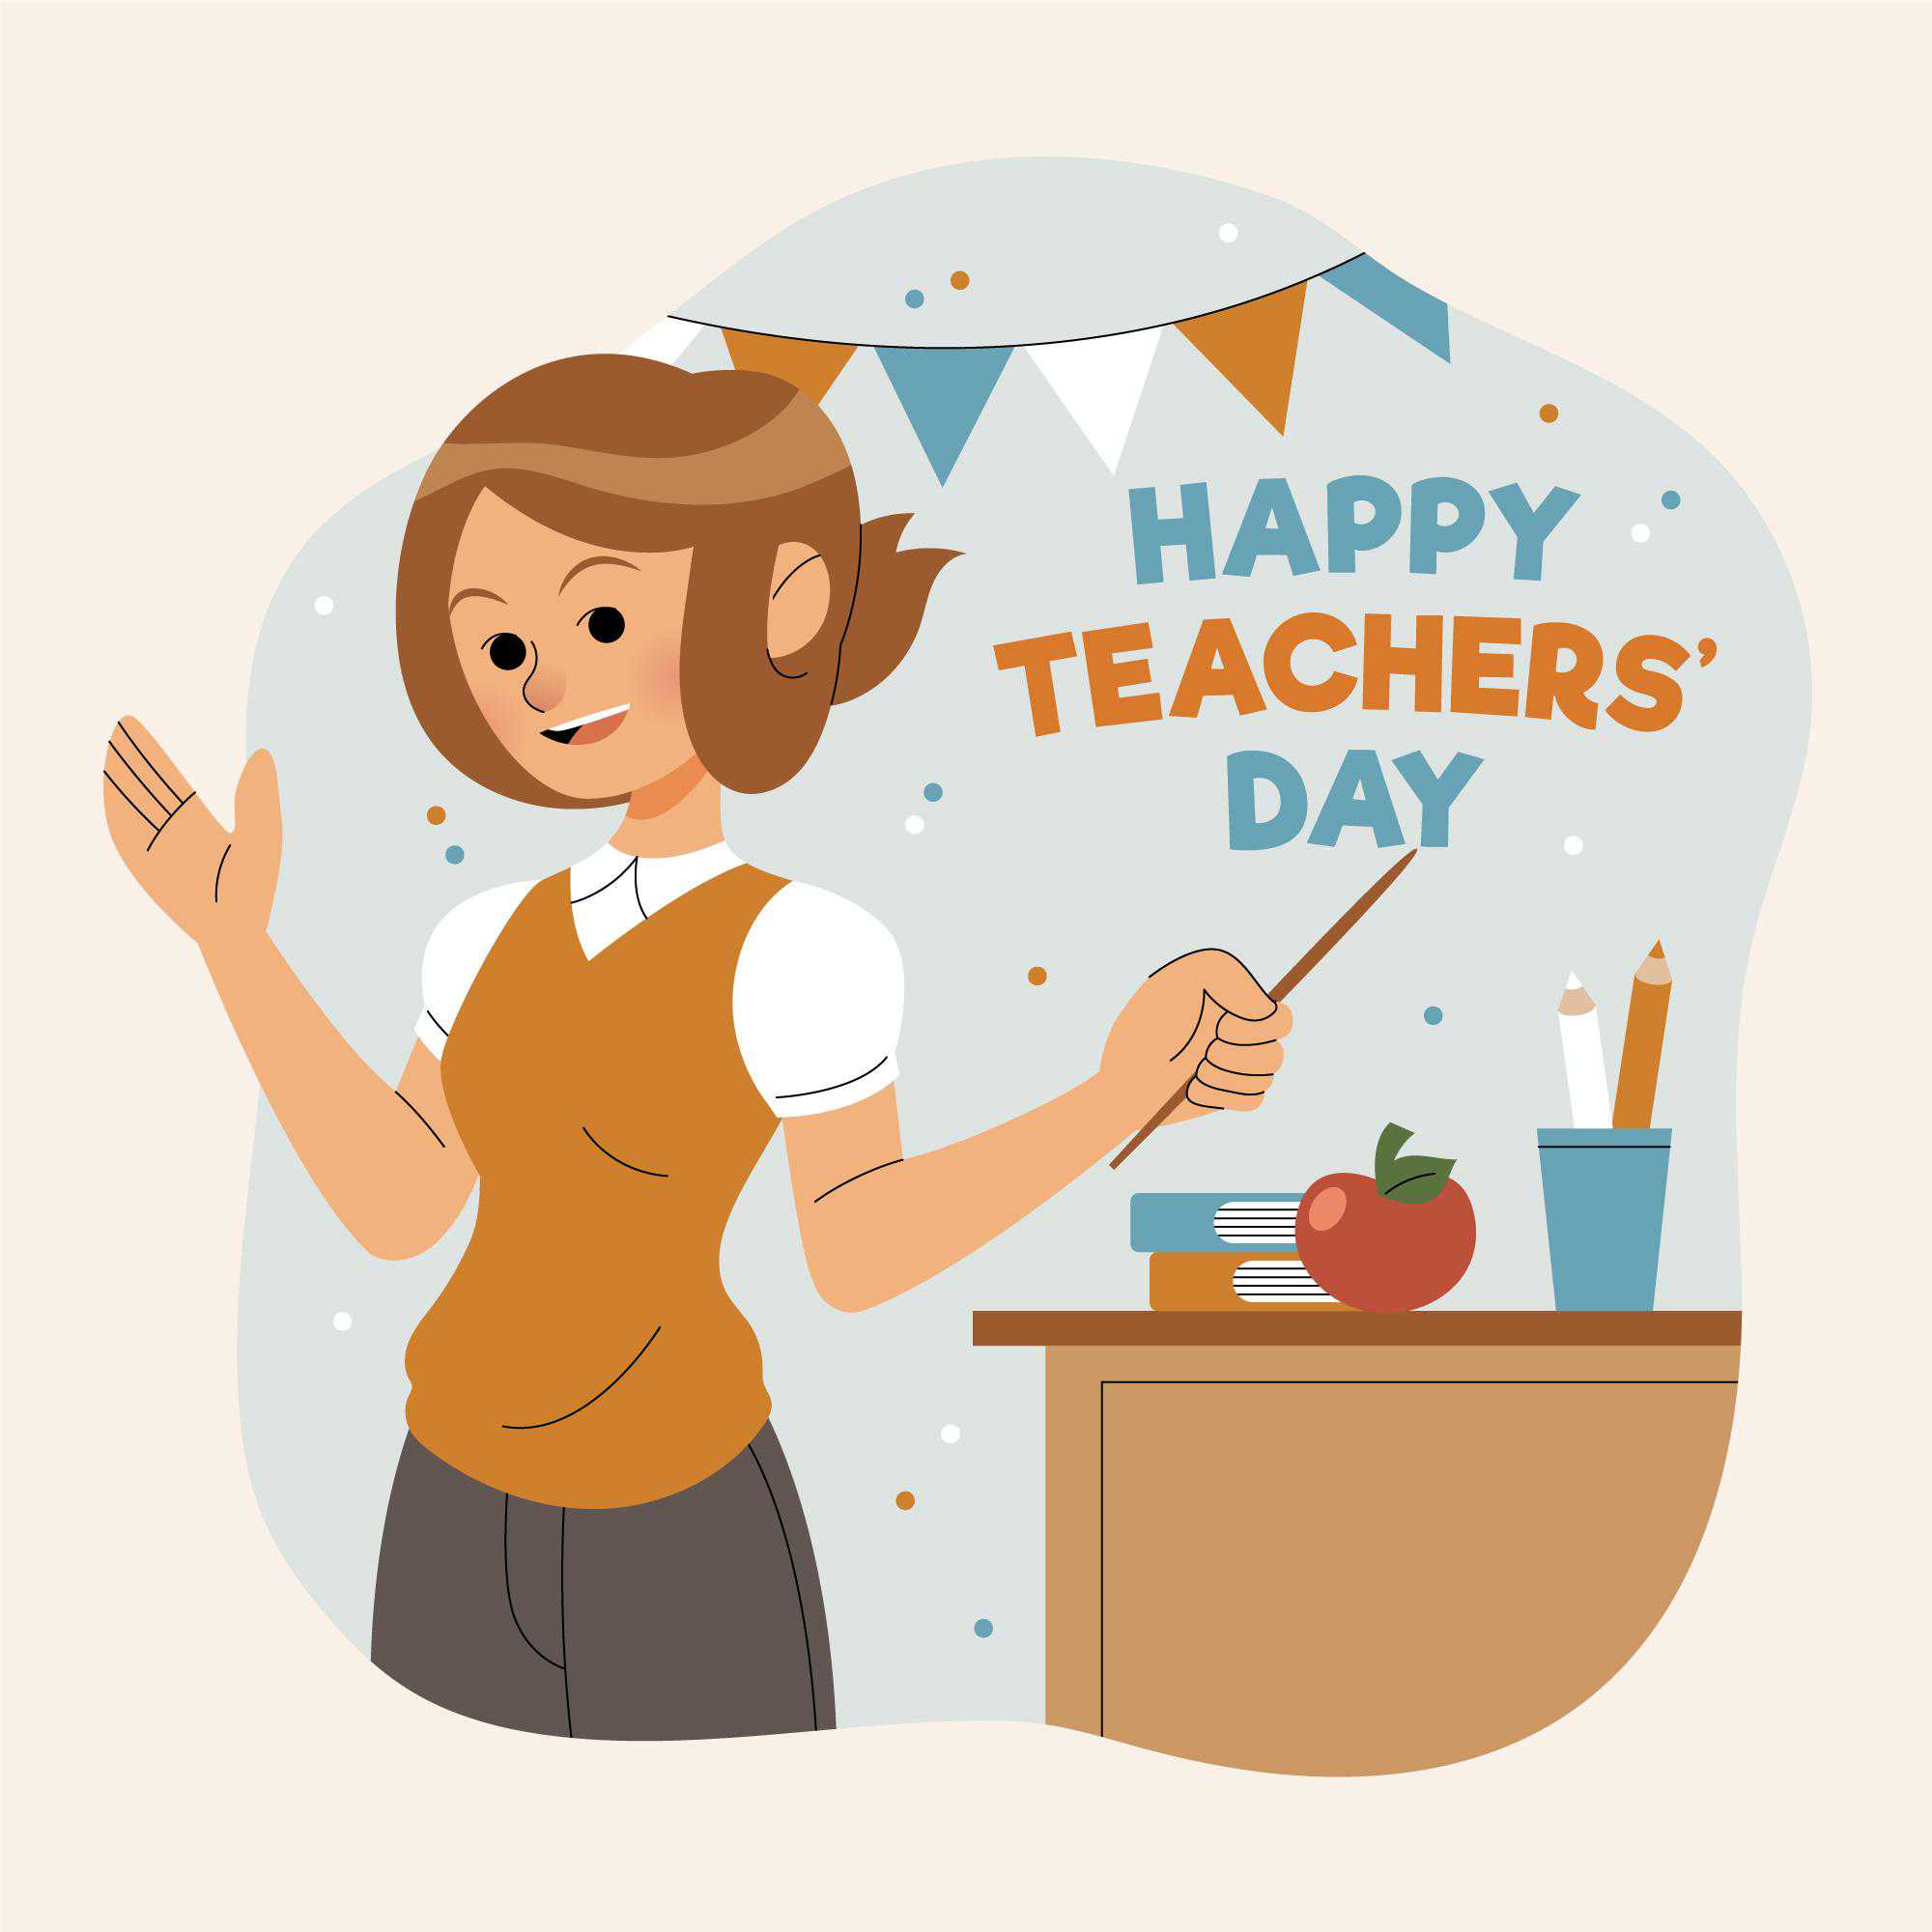 Happy Teacher's Day wallpaper